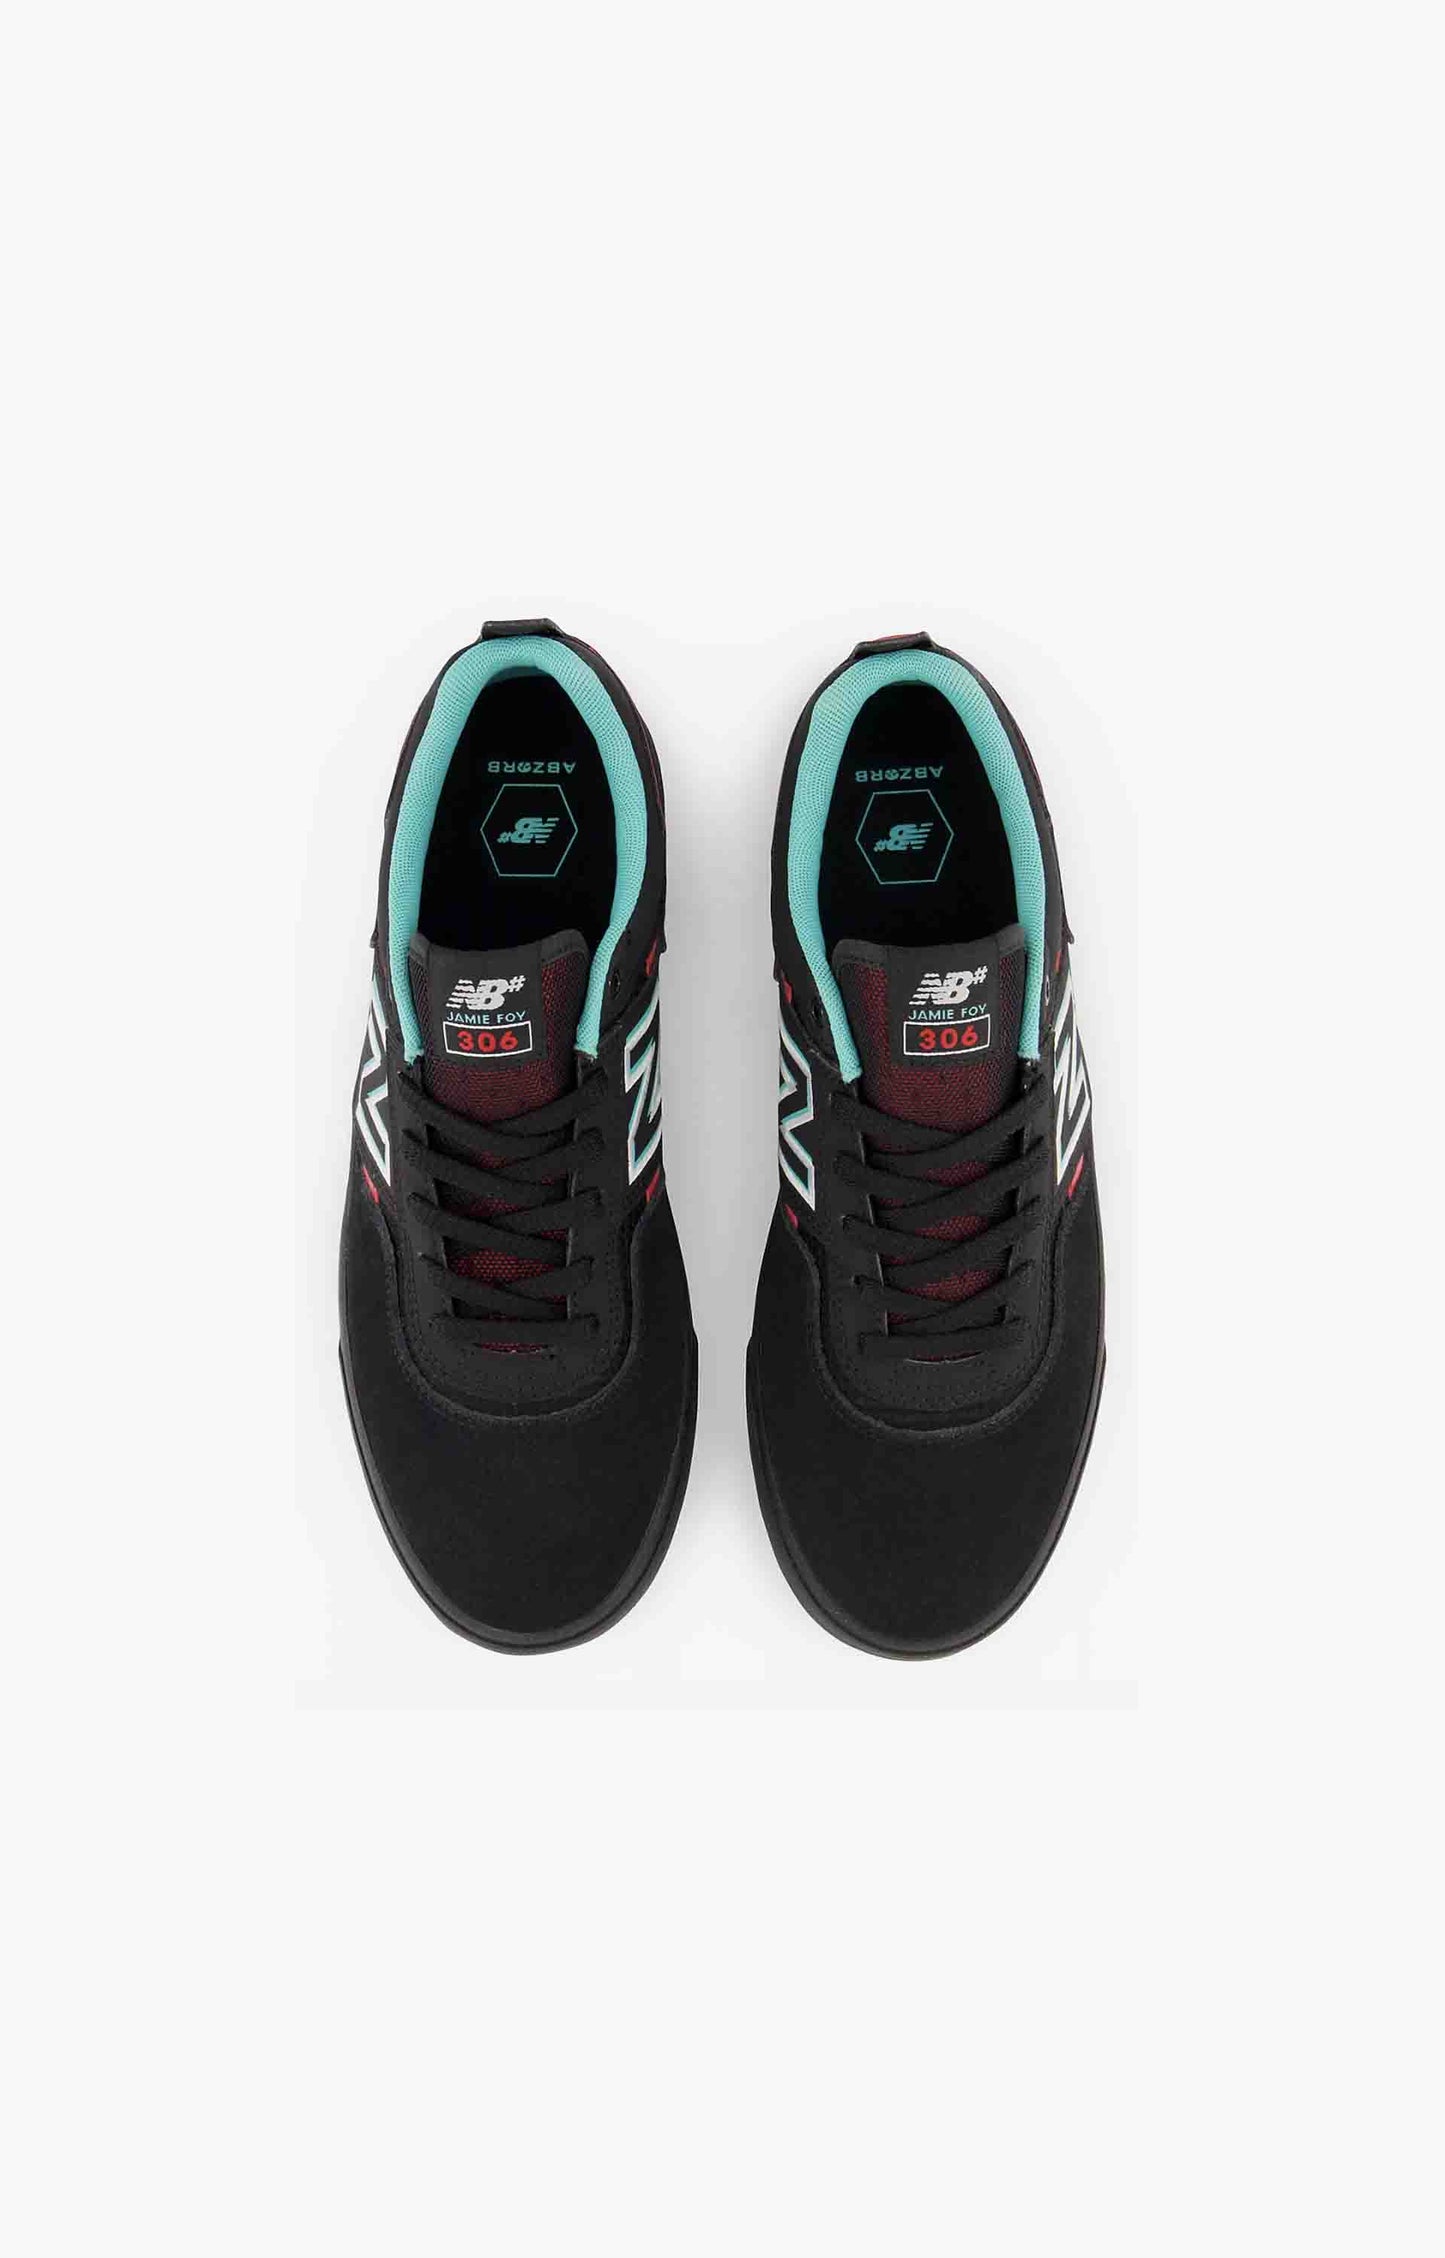 New Balance Numeric NM306RNR Shoe, Black